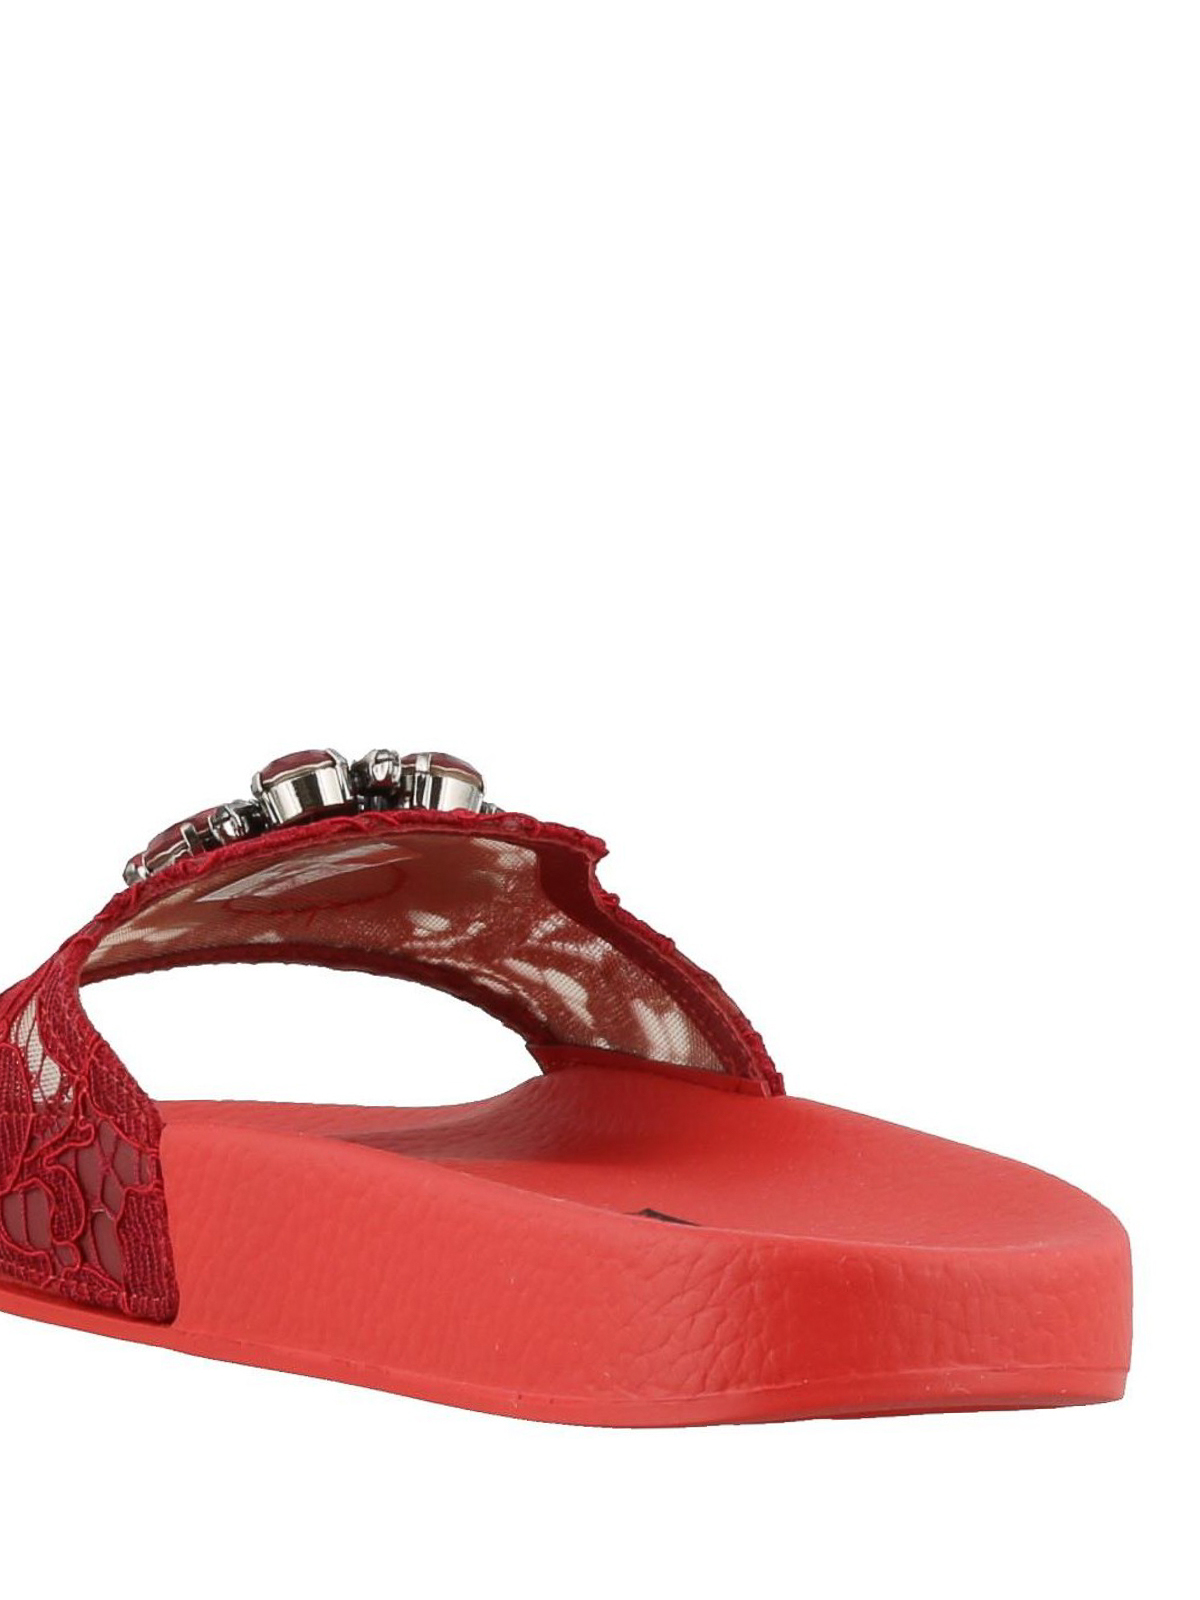 Dolce & Gabbana Women's Slide Sandals